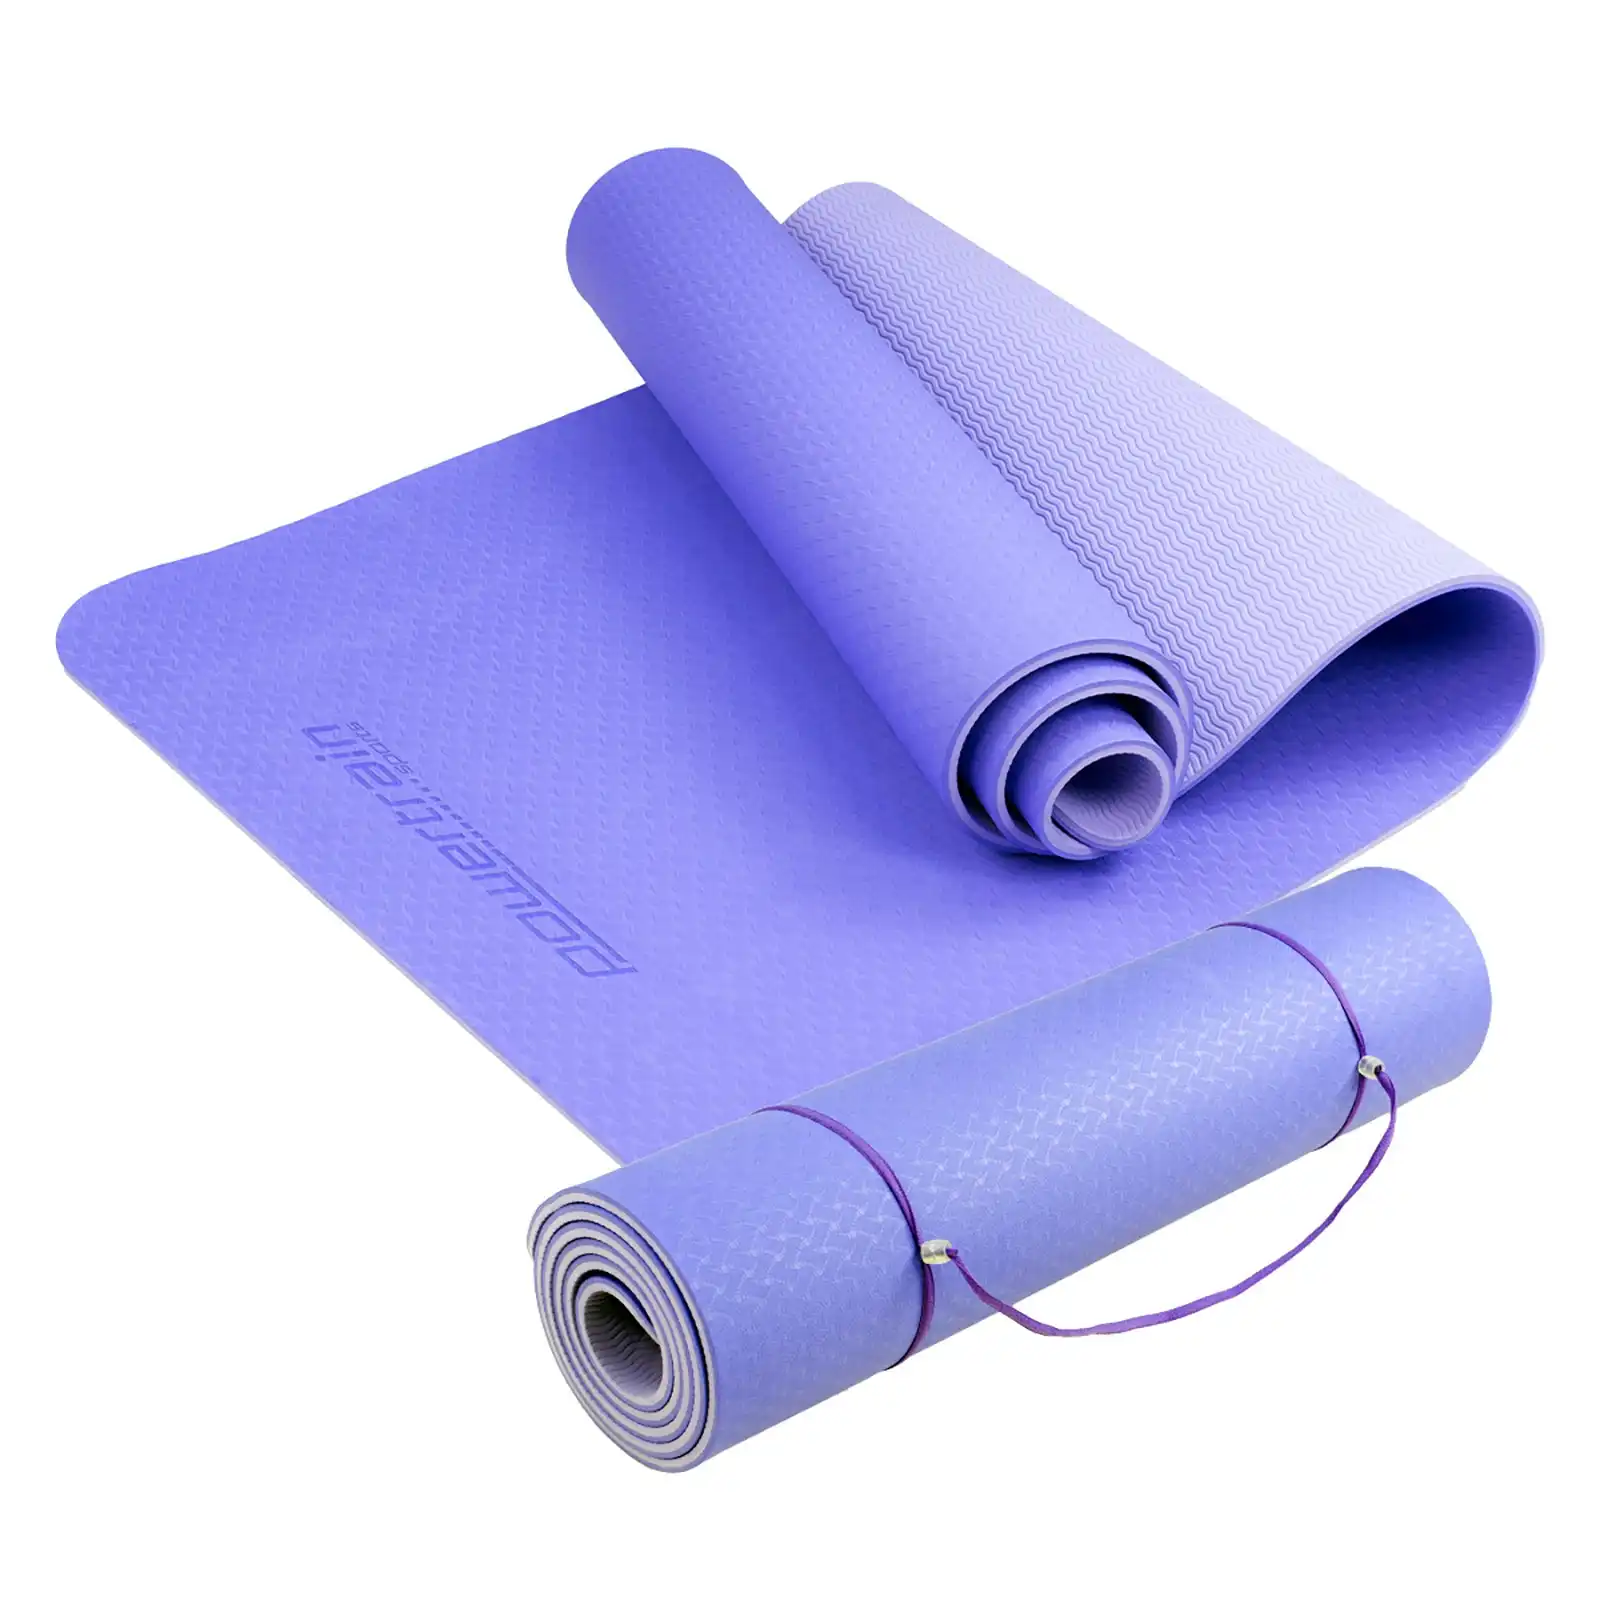 Powertrain Eco-Friendly TPE Pilates Exercise Yoga Mat 8mm - Light Purple